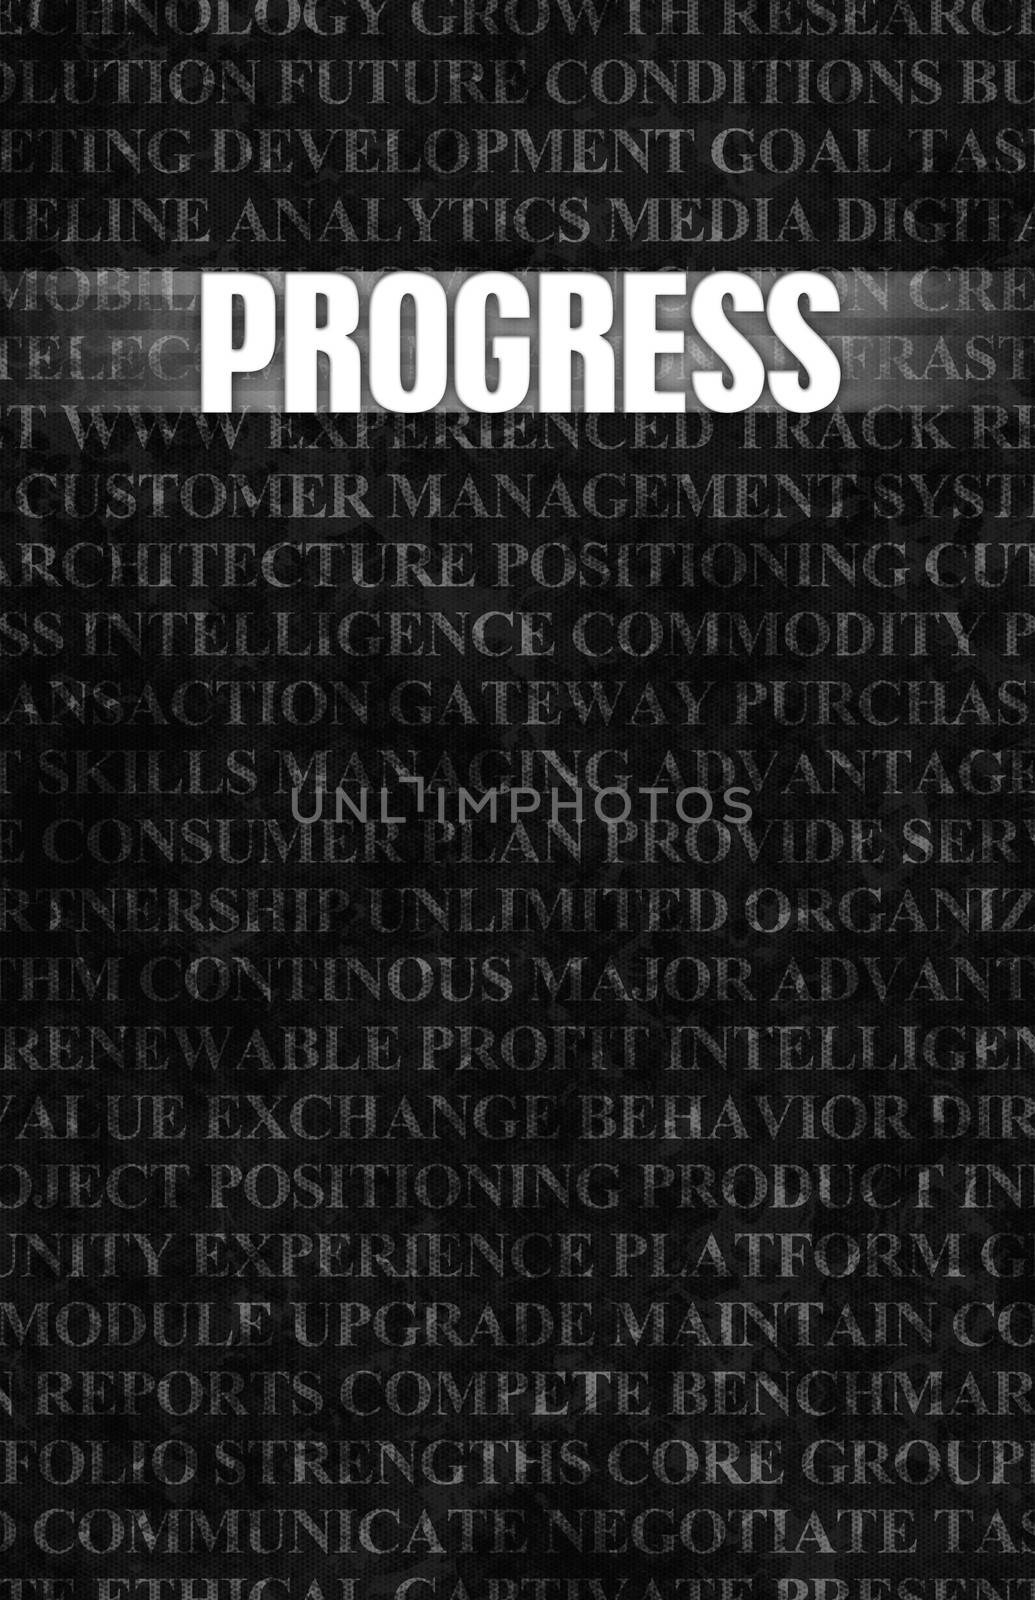 Progress in Business as Motivation in Stone Wall